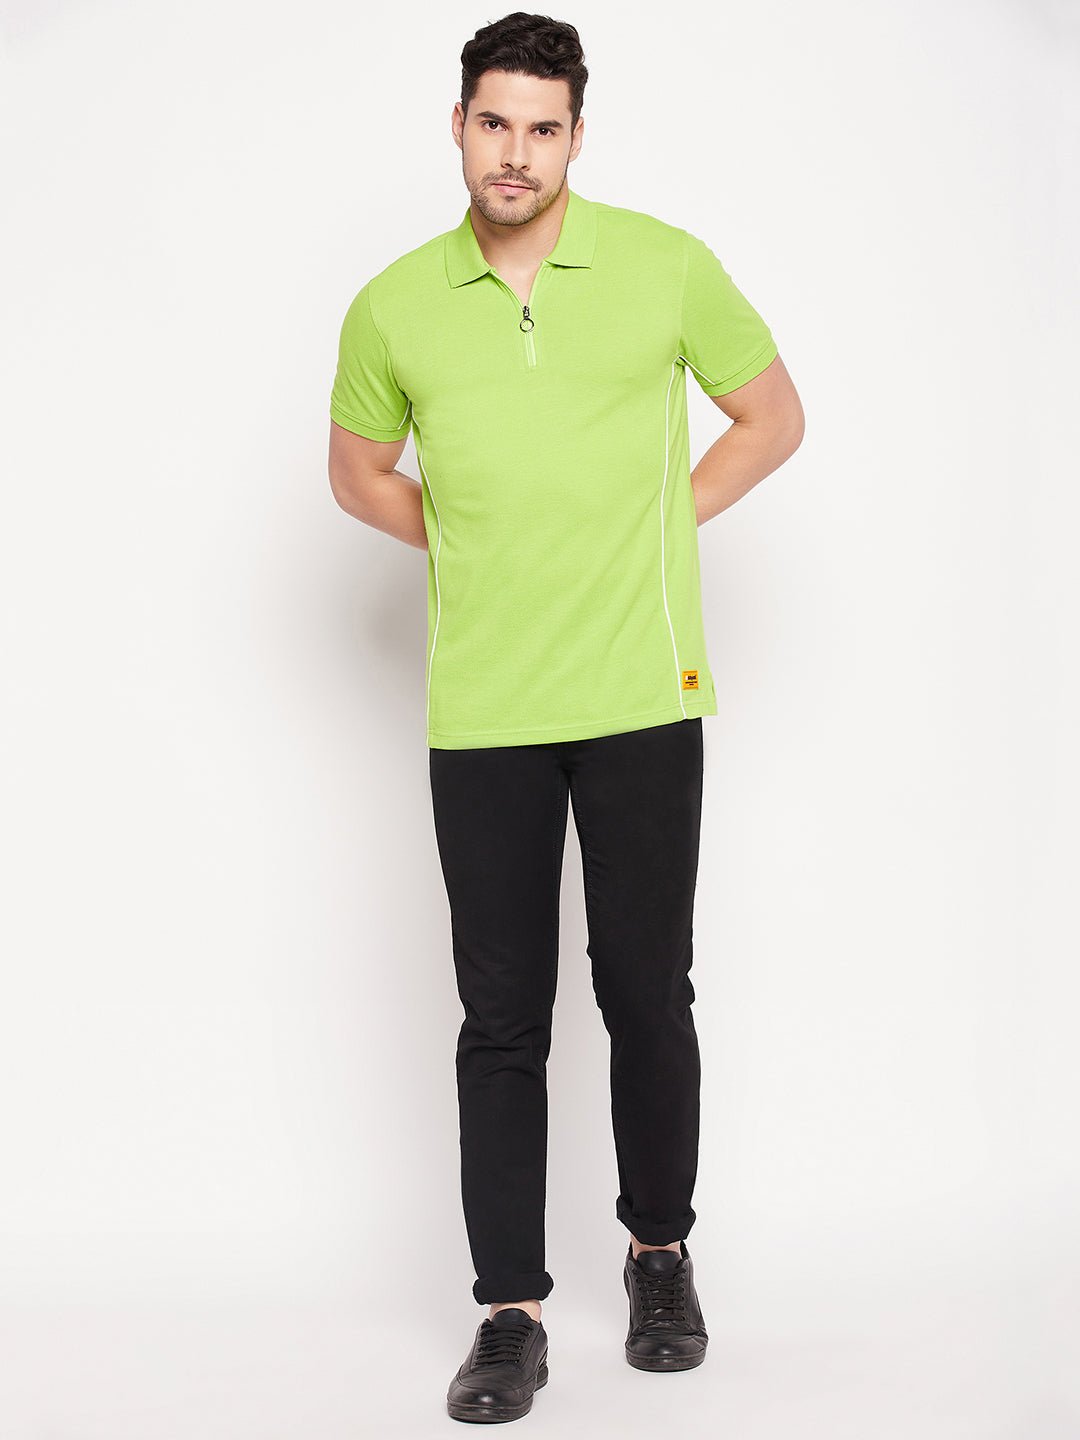 Lime Green Polo T-shirt - clubyork